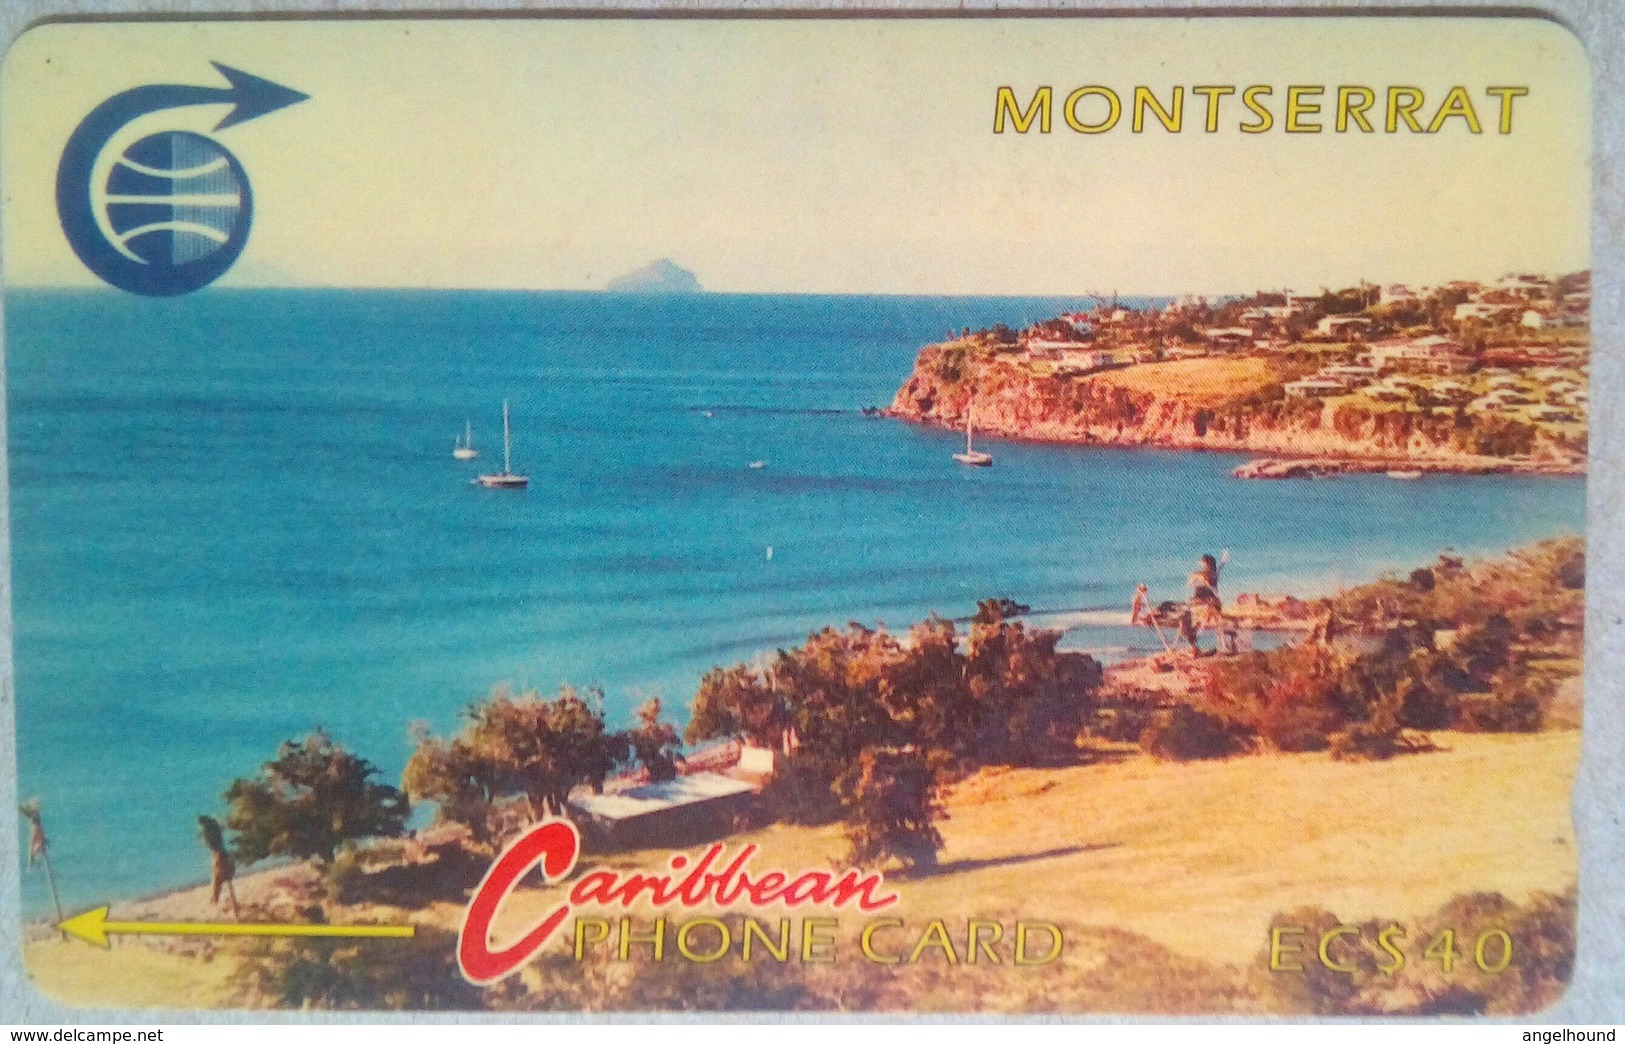 Montserrat EC $40 3CMTC "Redonda Bay" - Montserrat